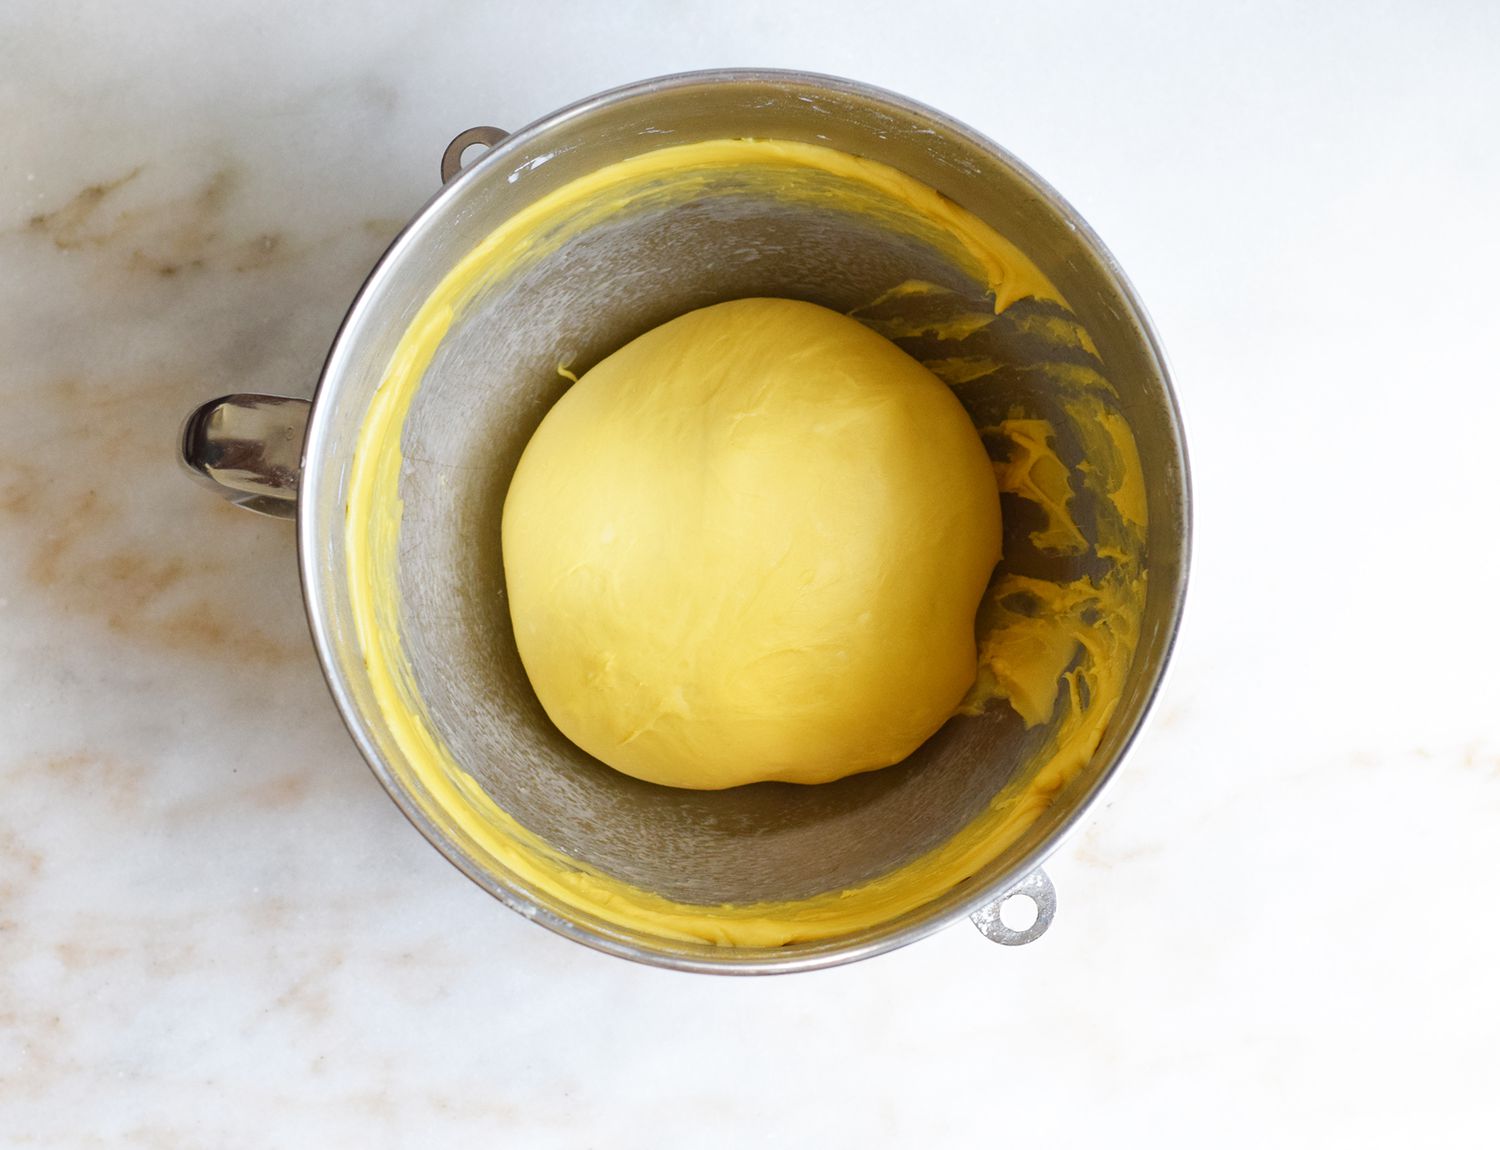 sourdough challah kneaded dough in a bowl